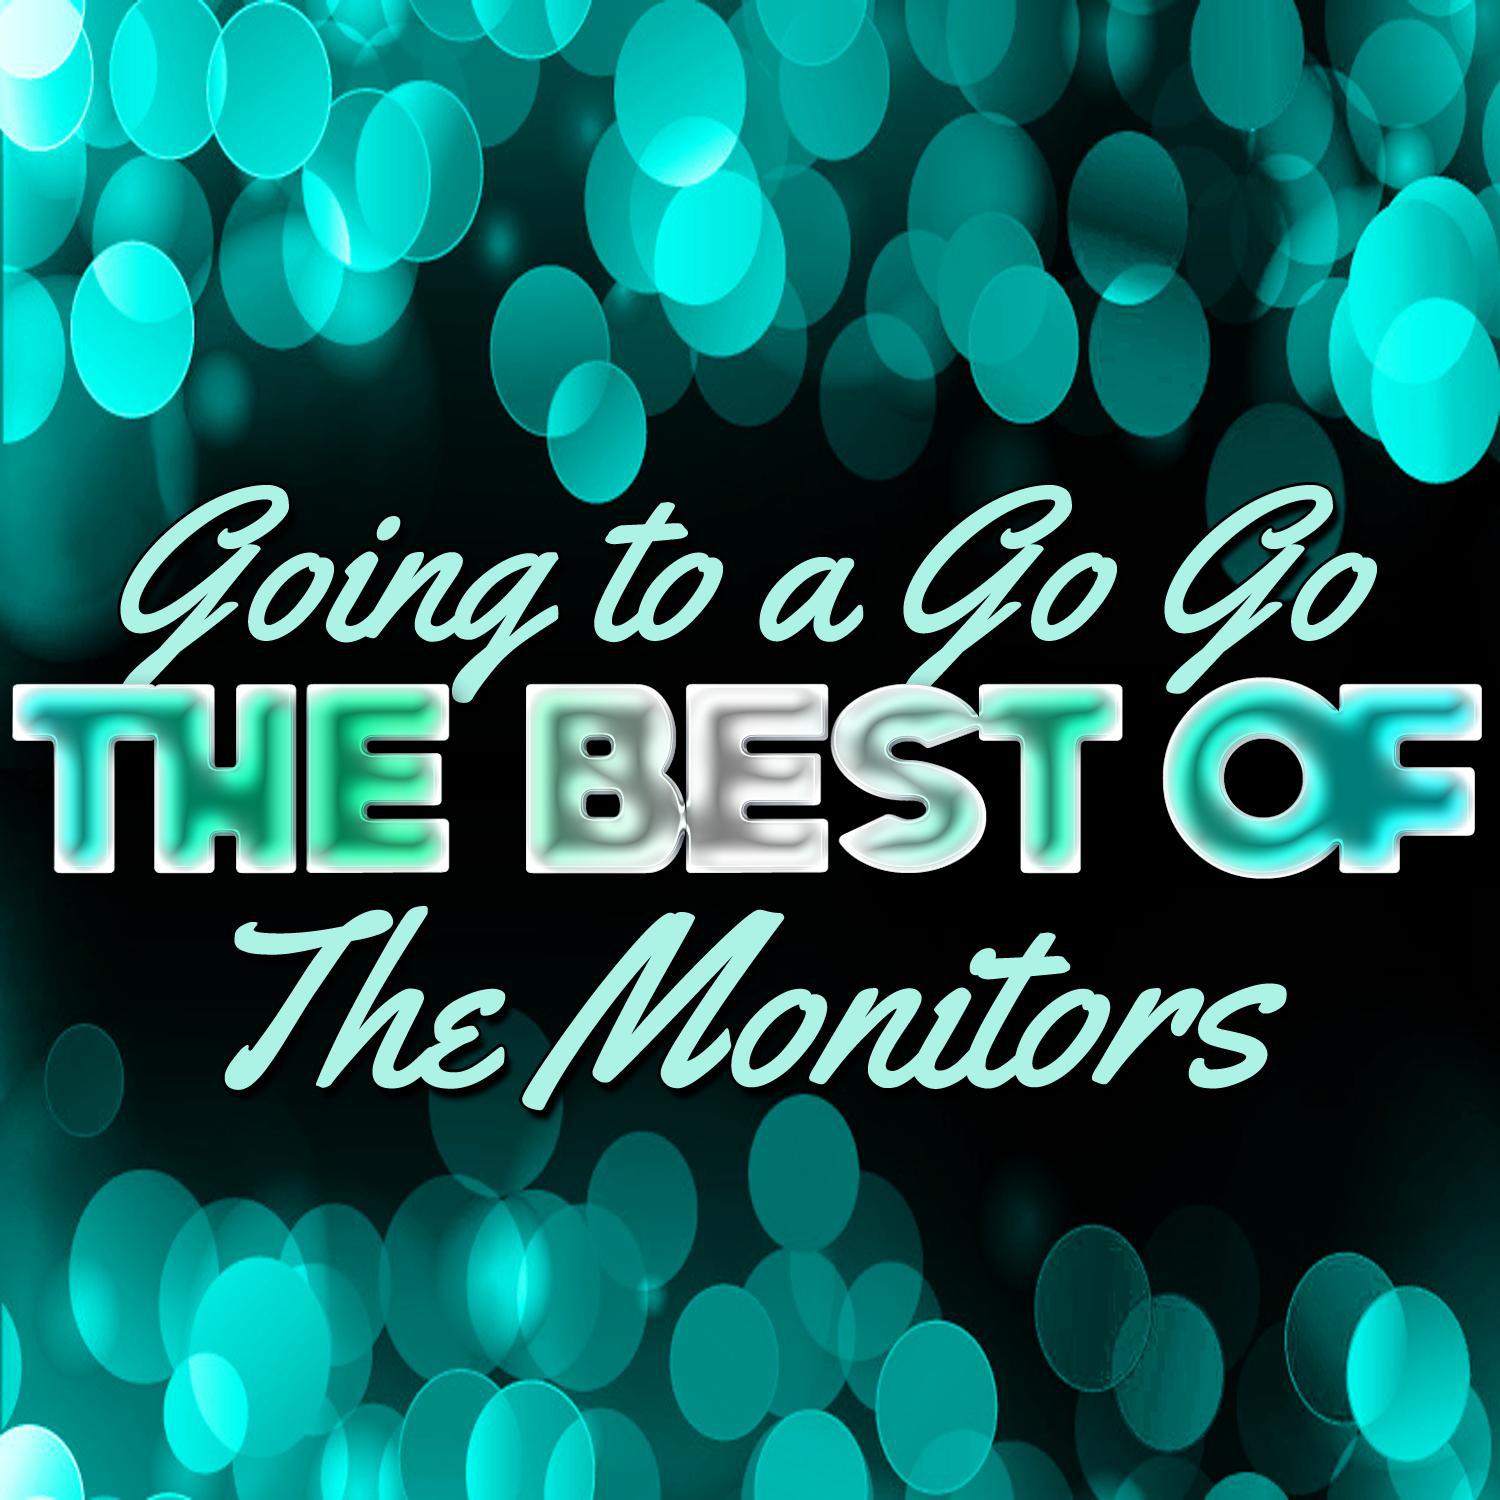 The Monitors - You Are My Destiny